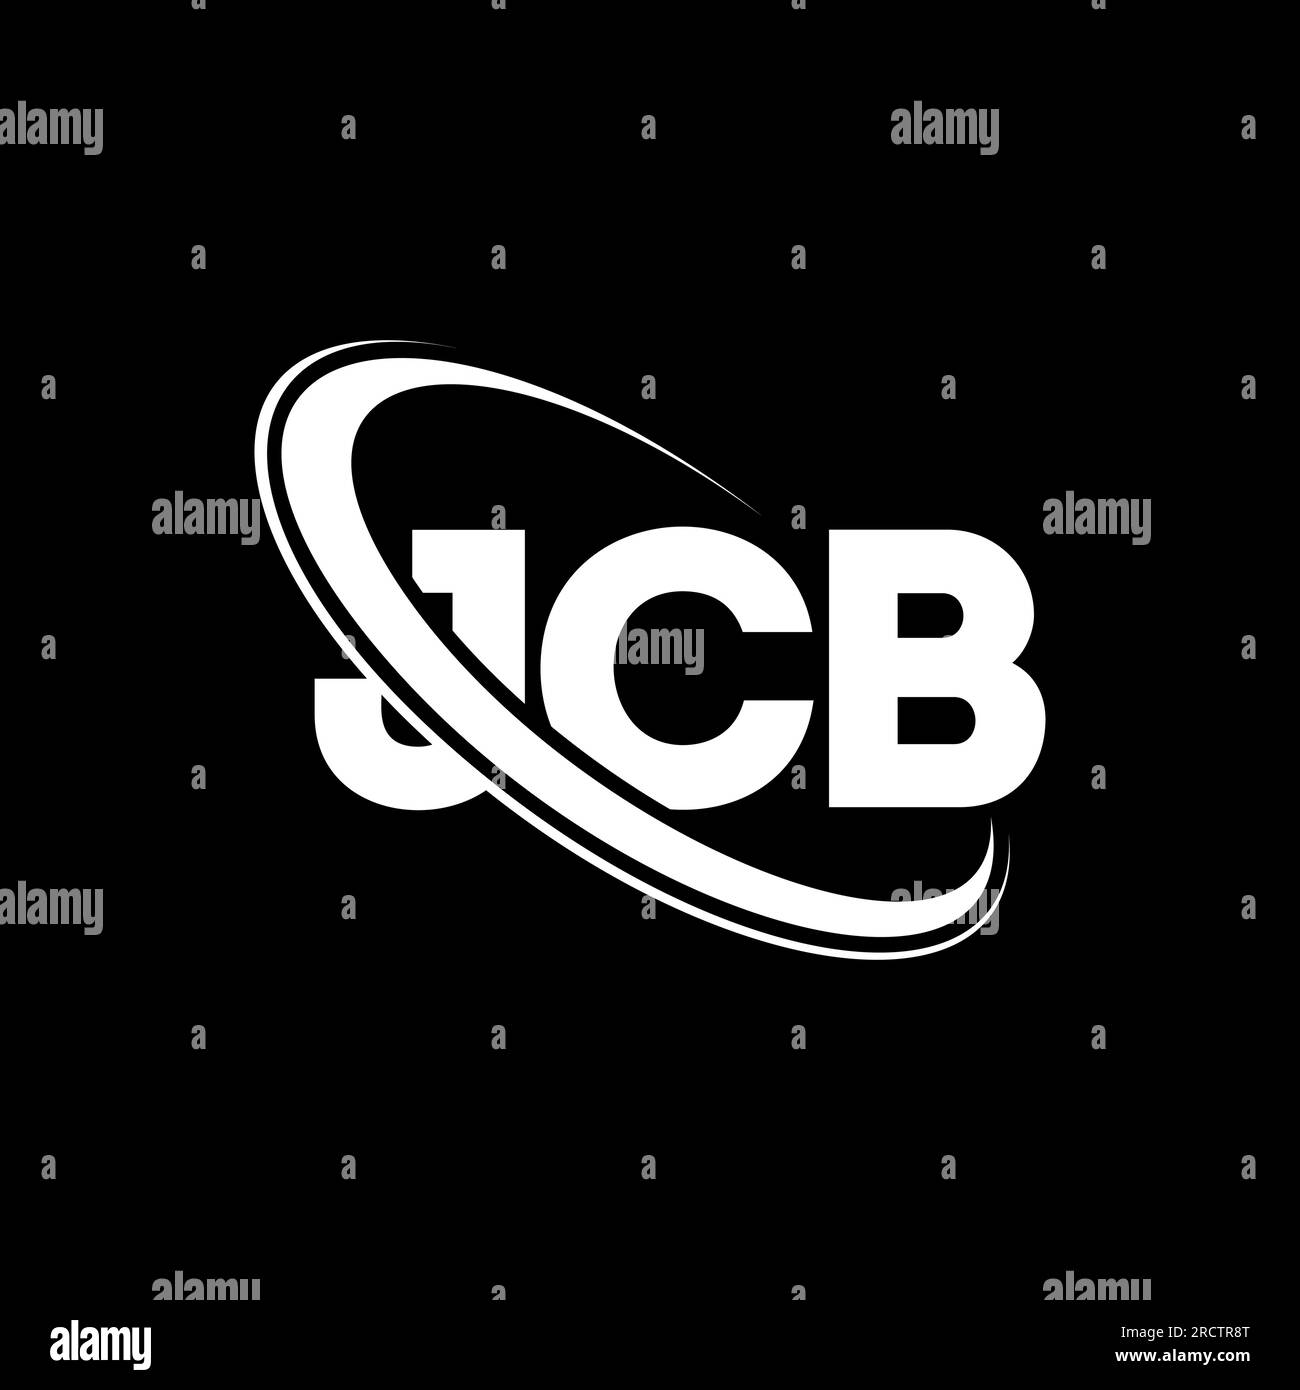 Jcb symbol Stock Vector Images - Alamy